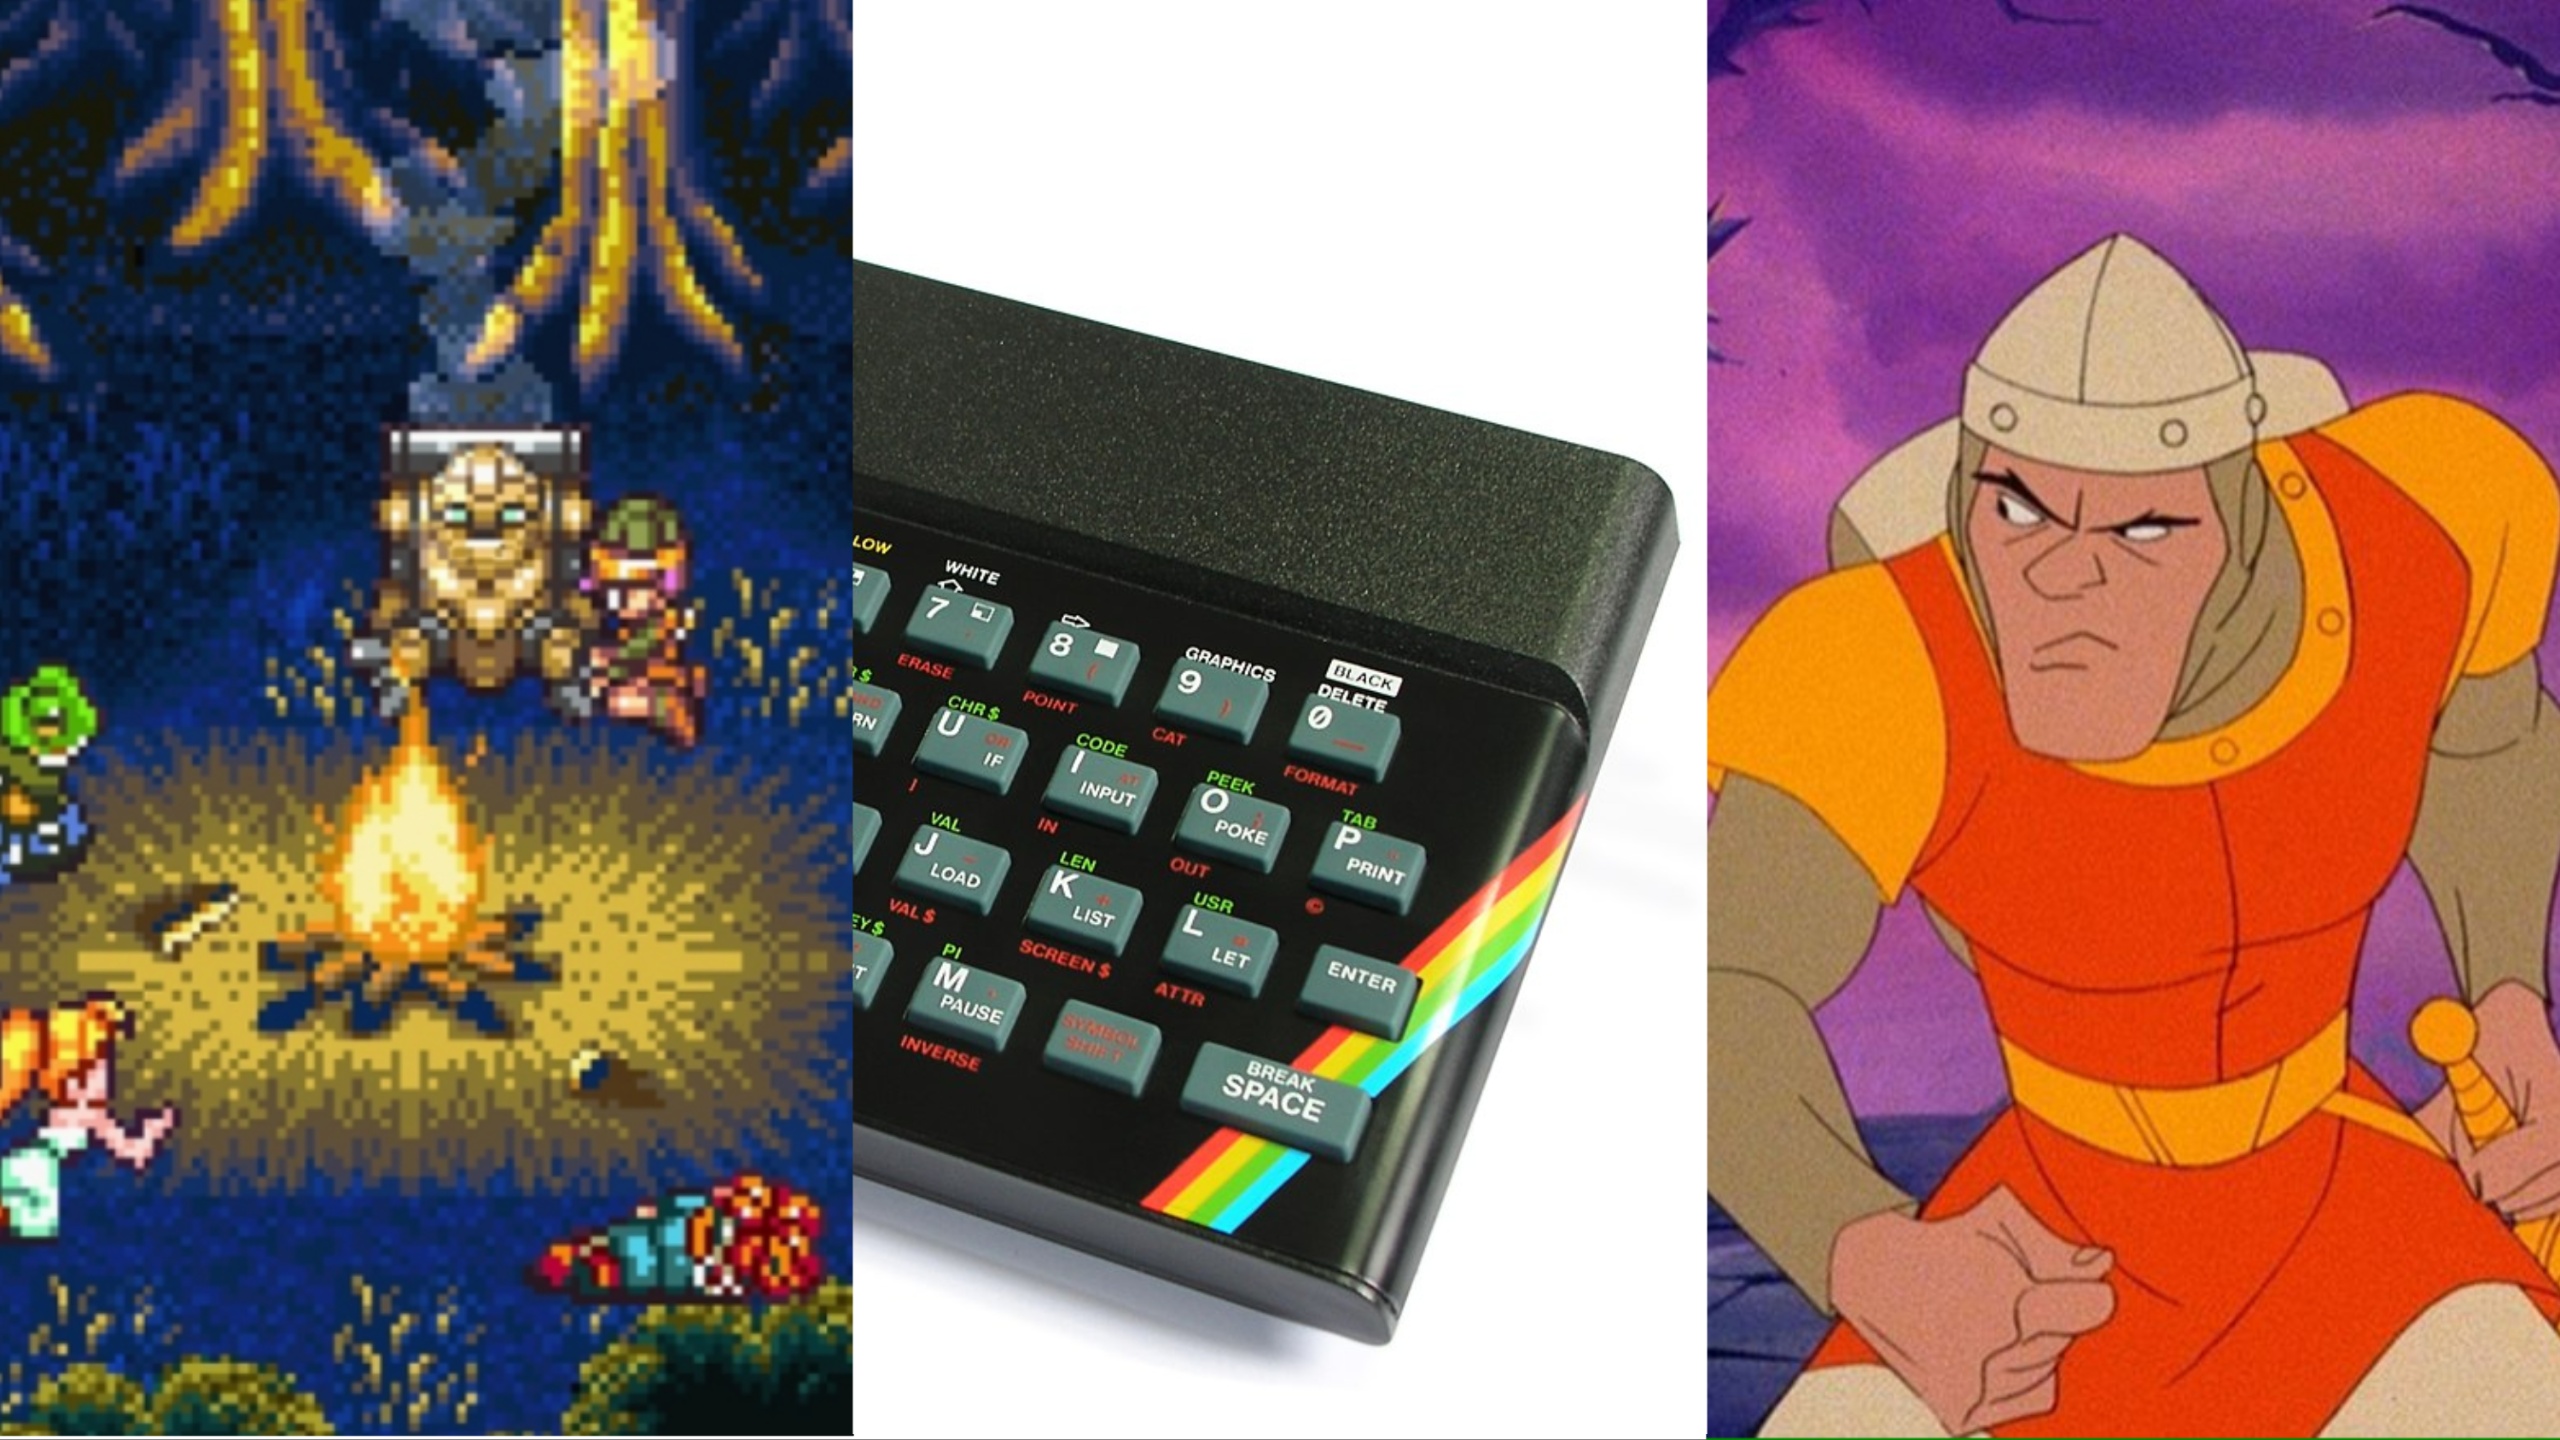 Nerd Nostalgia: 7 Classic Video Games to Know